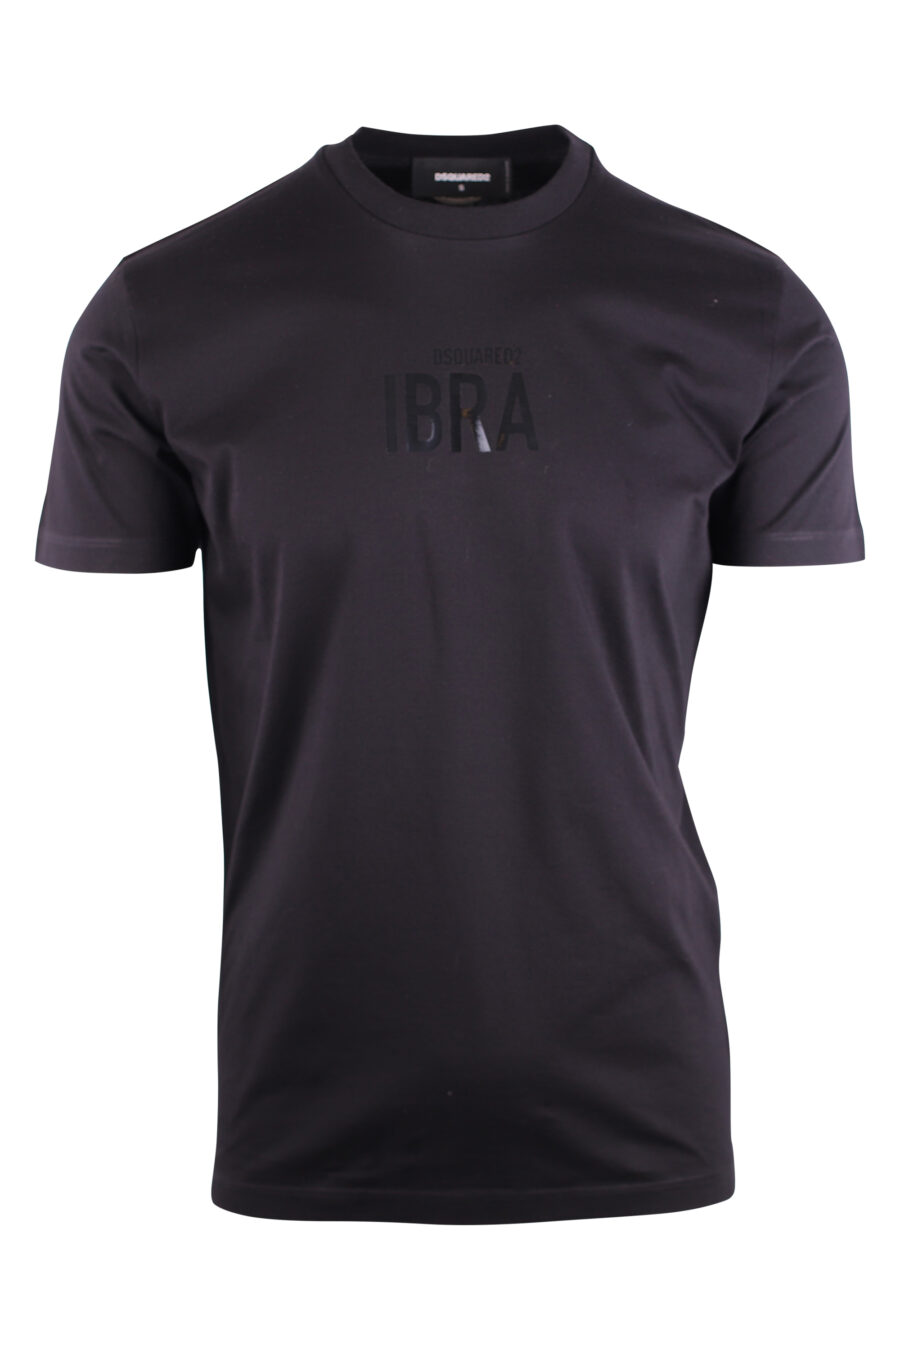 T-shirt noir avec logo "ibra" monochrome - IMG 3109